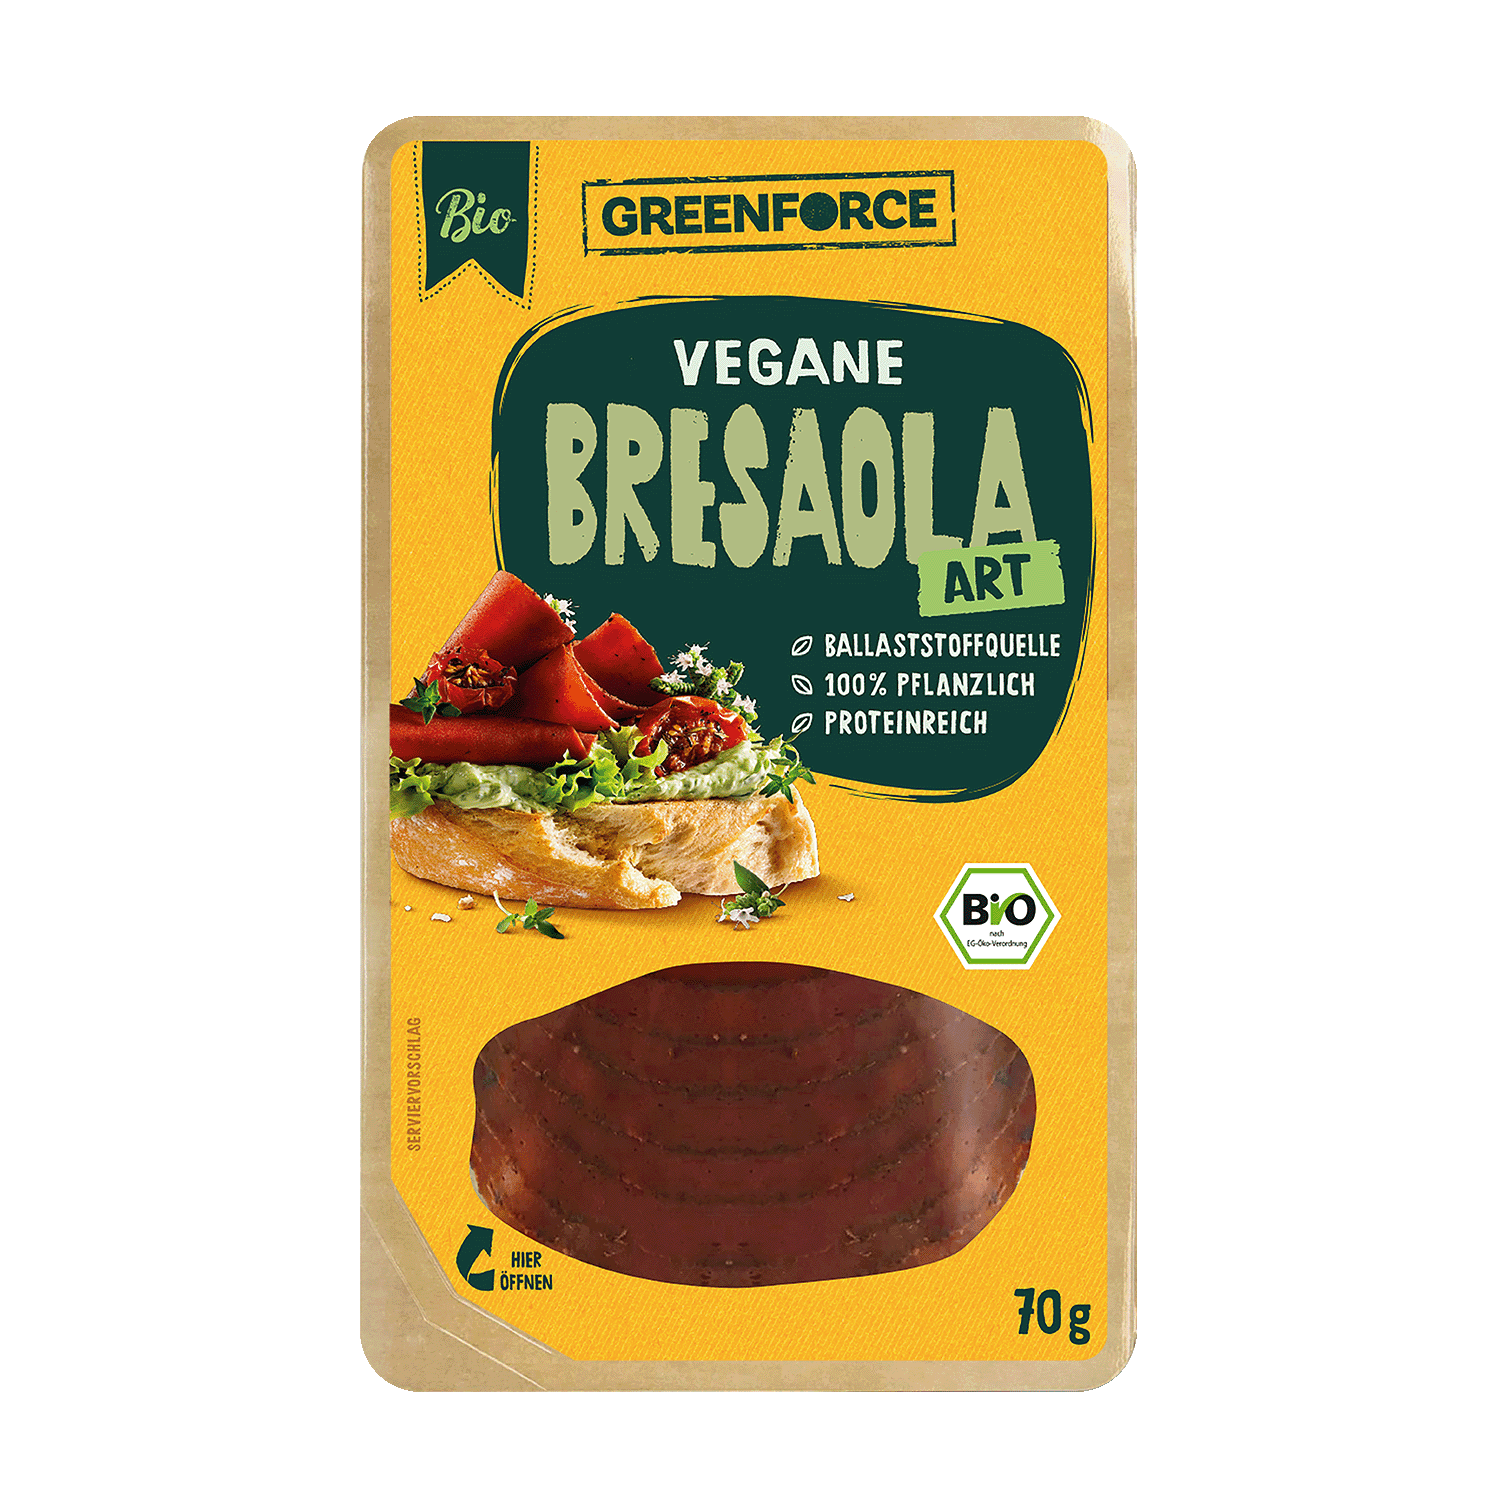 Vegane Bresaola Art, BIO, 70g